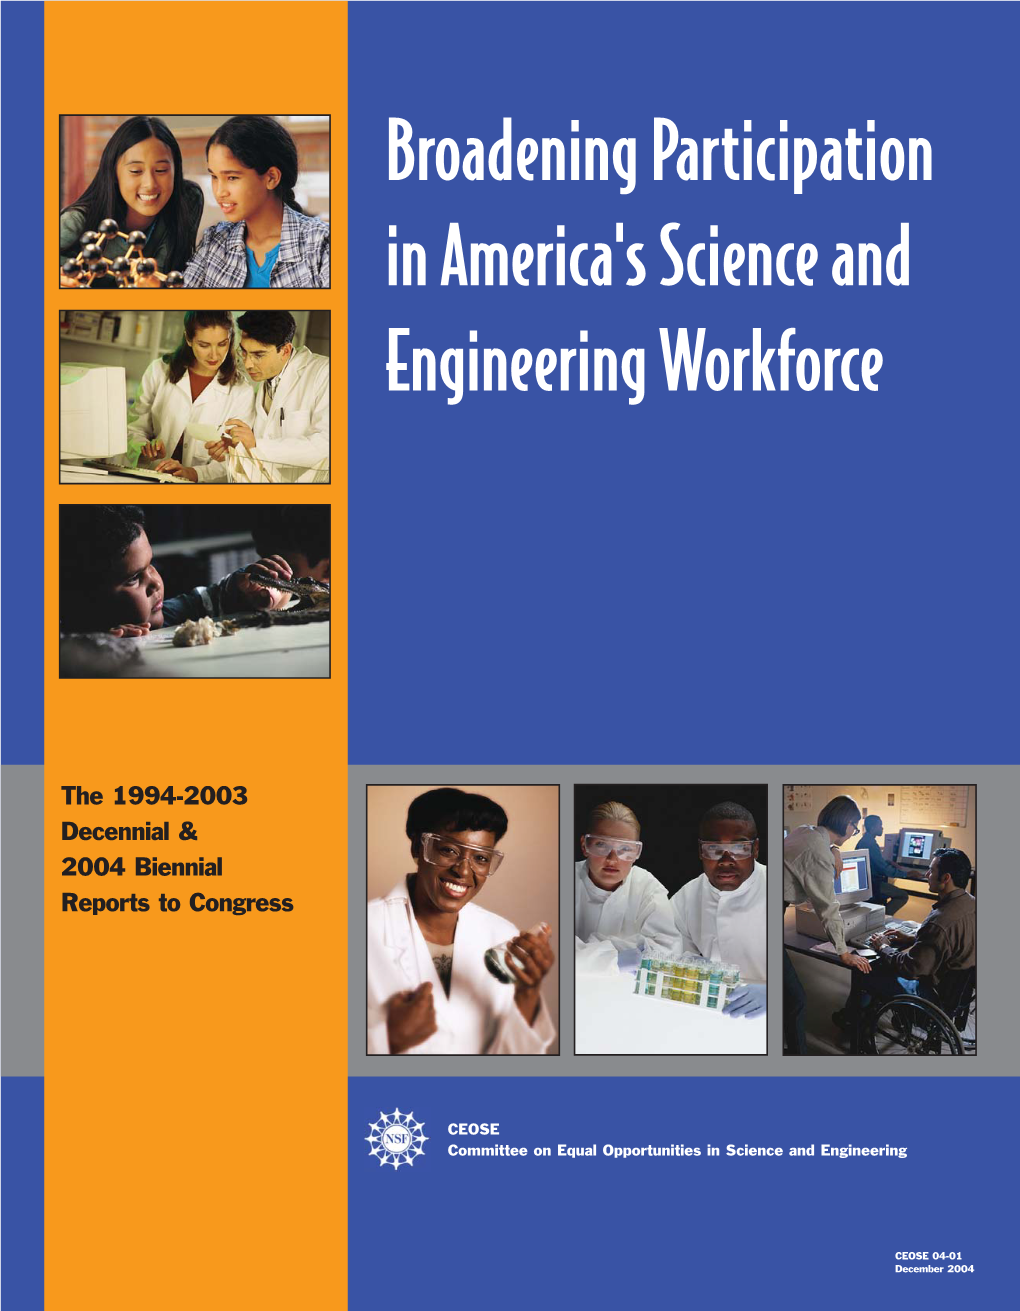 Broadening Participation in America's Science and Engineering Workforce